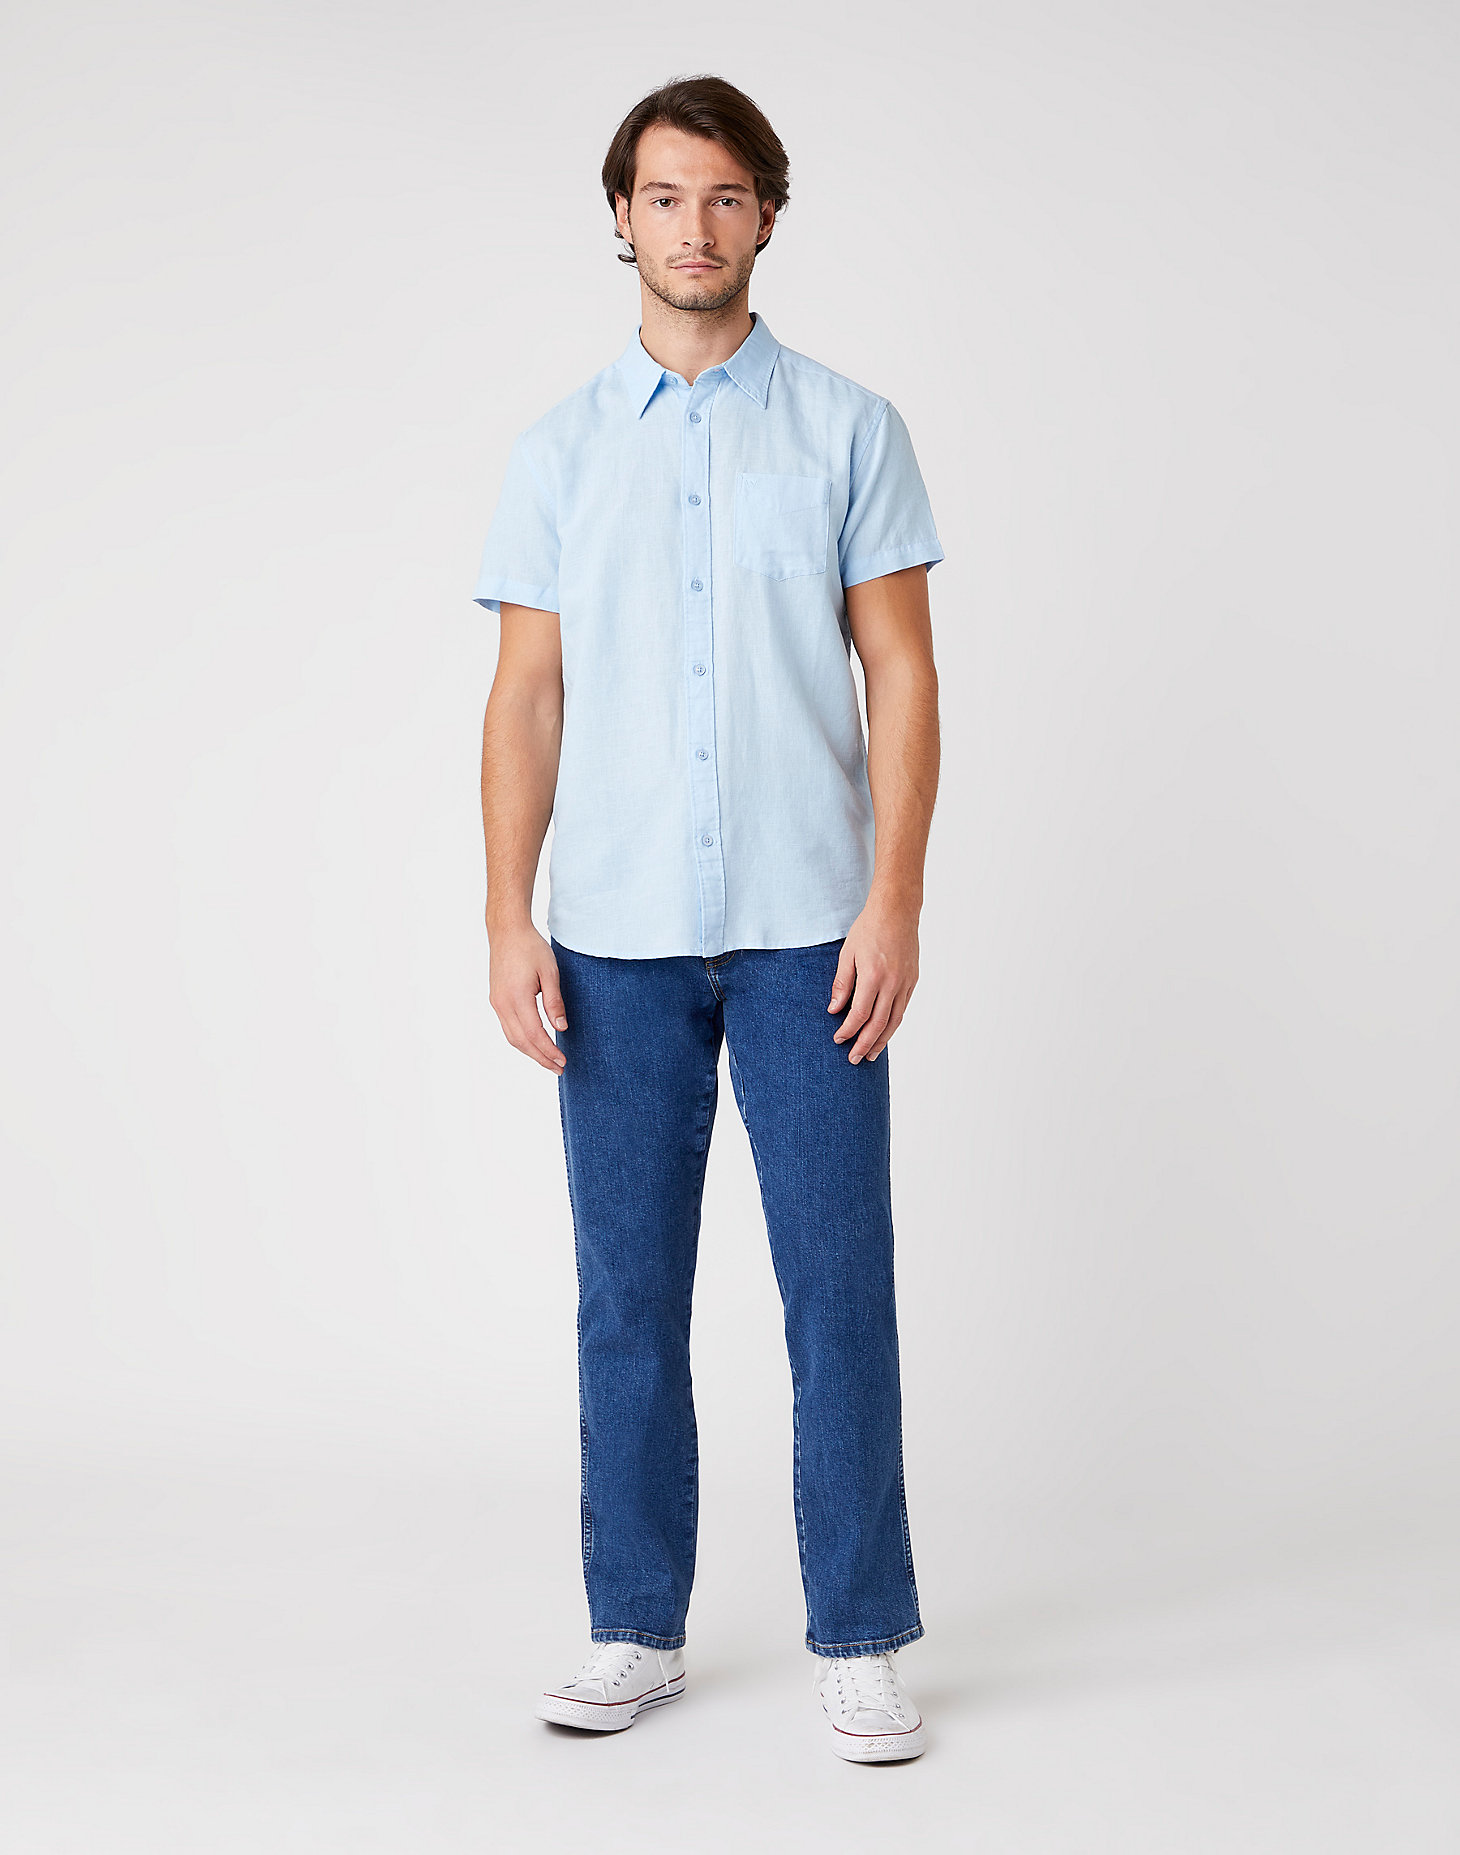 Short Sleeve One Pocket Shirt in Cerulean Blue alternative view 1